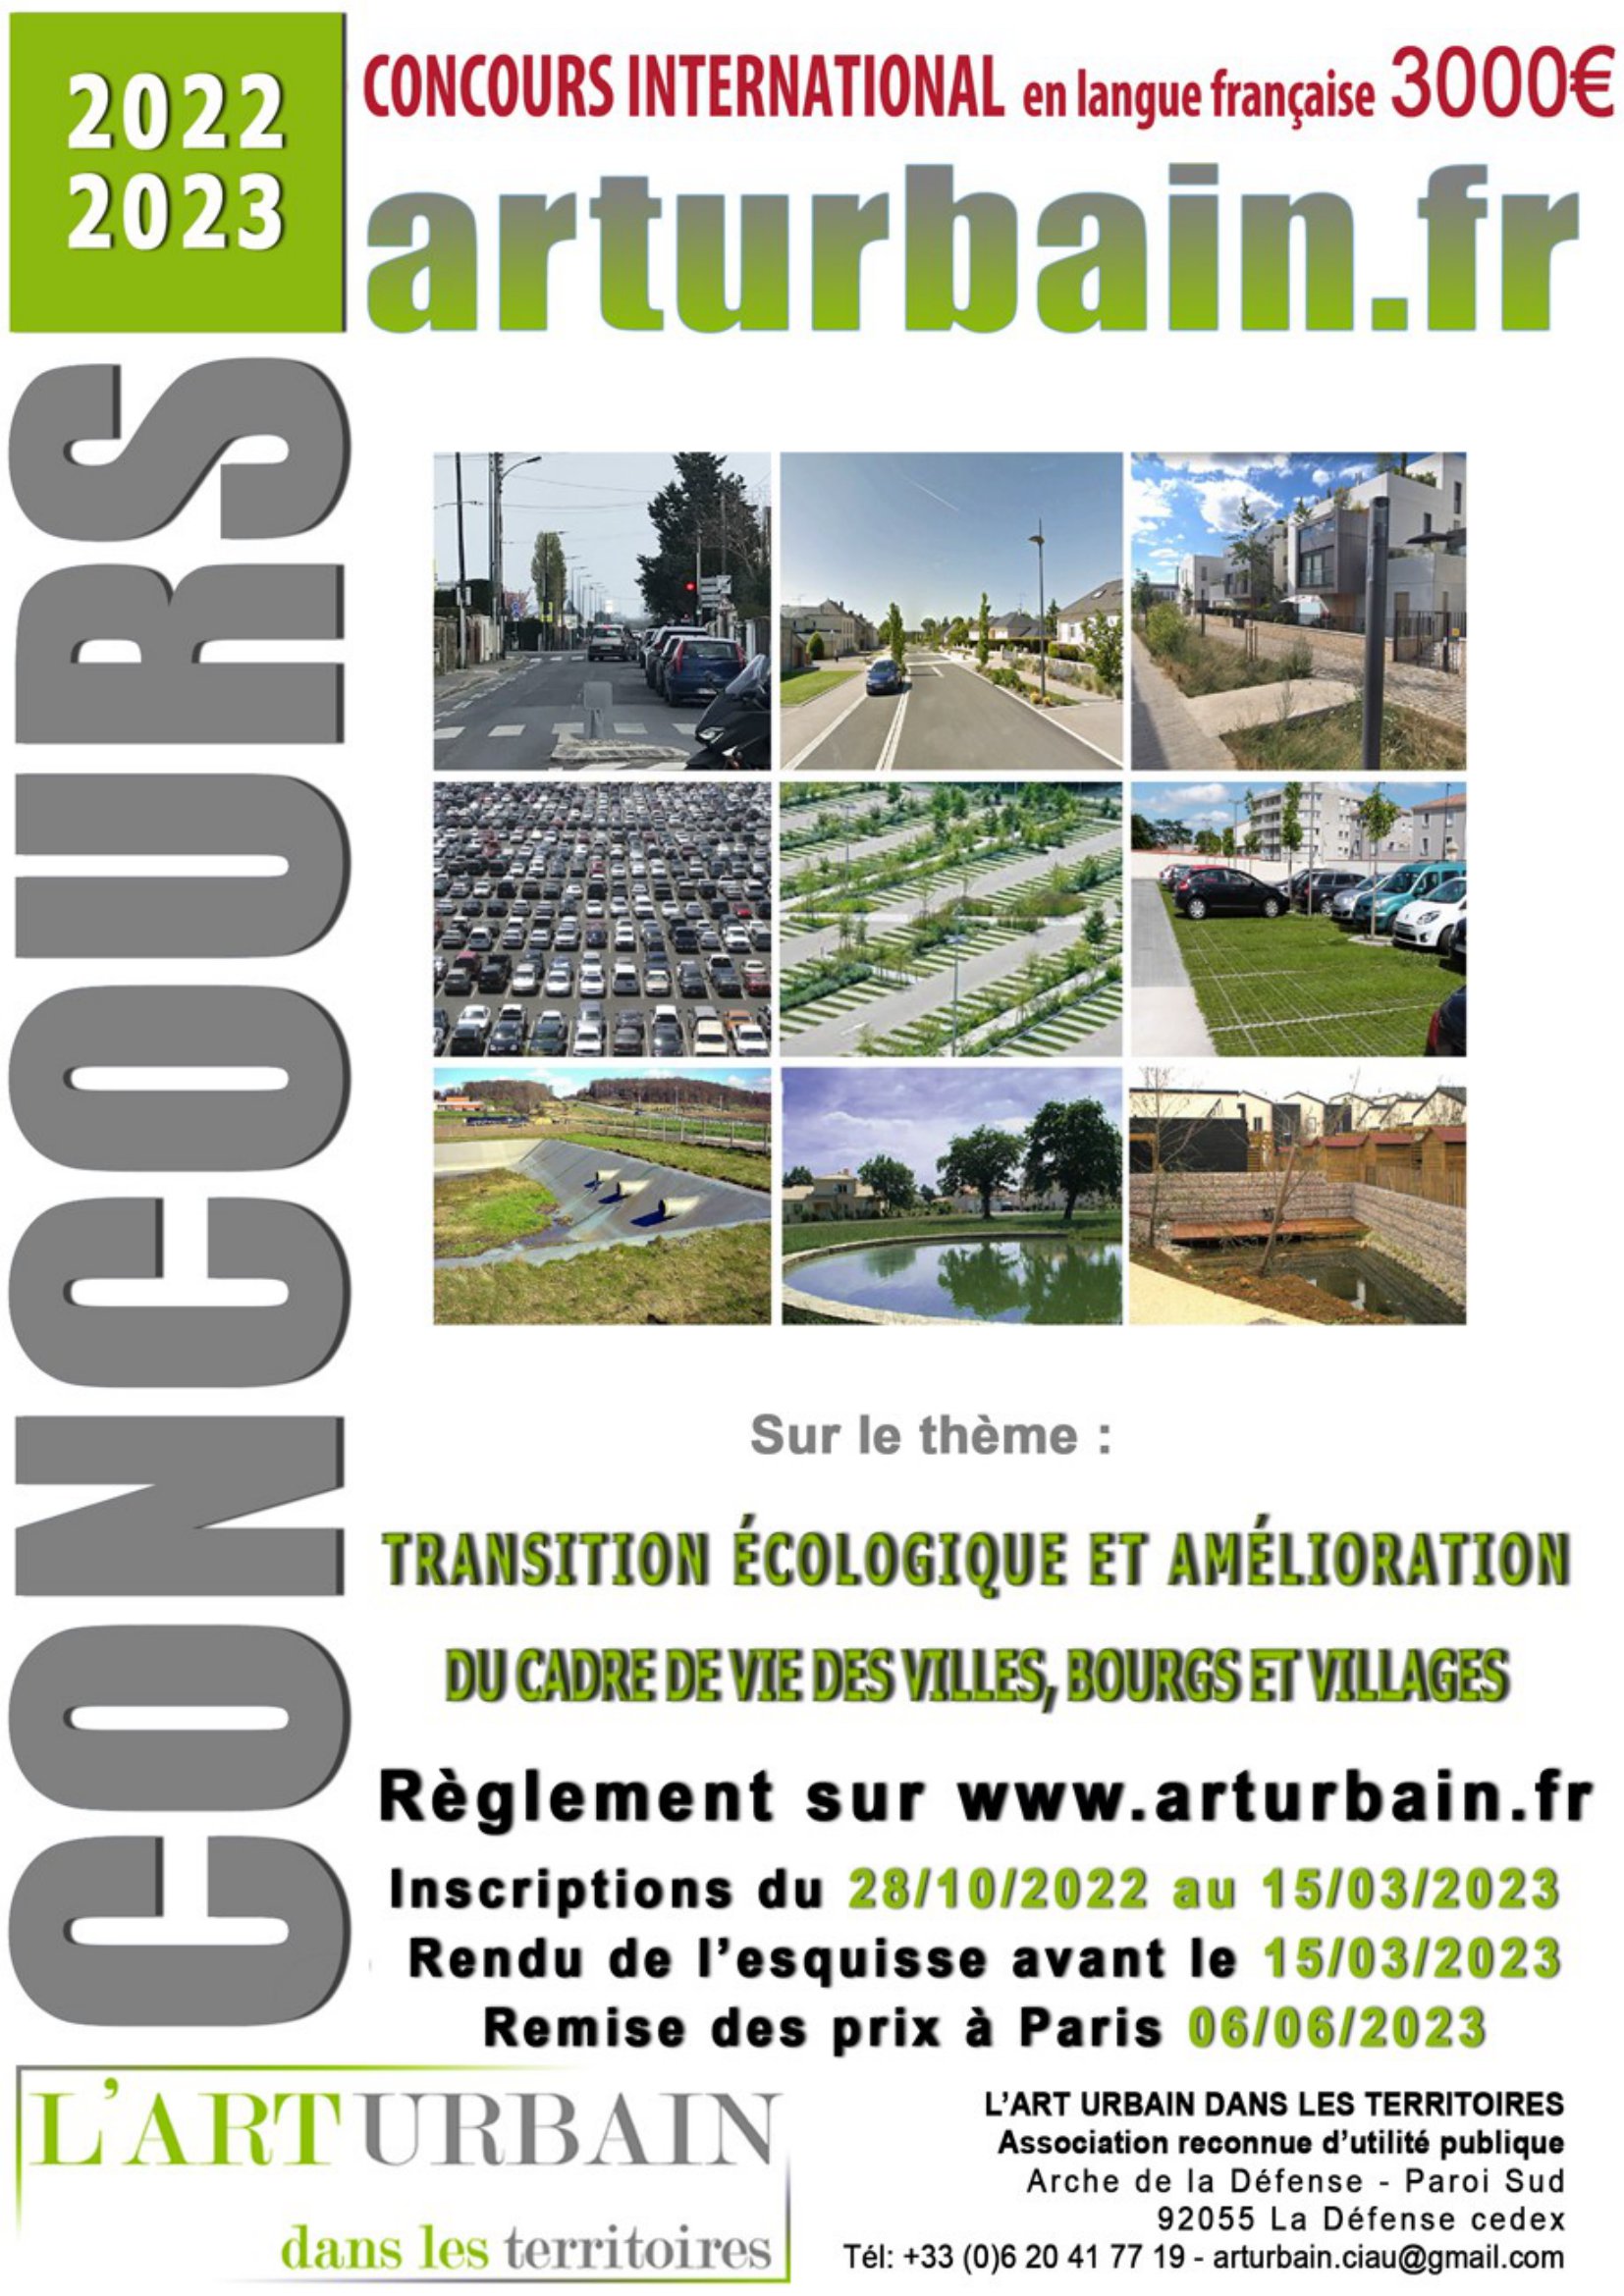 Concours International arturbain.fr 2022 / 2023